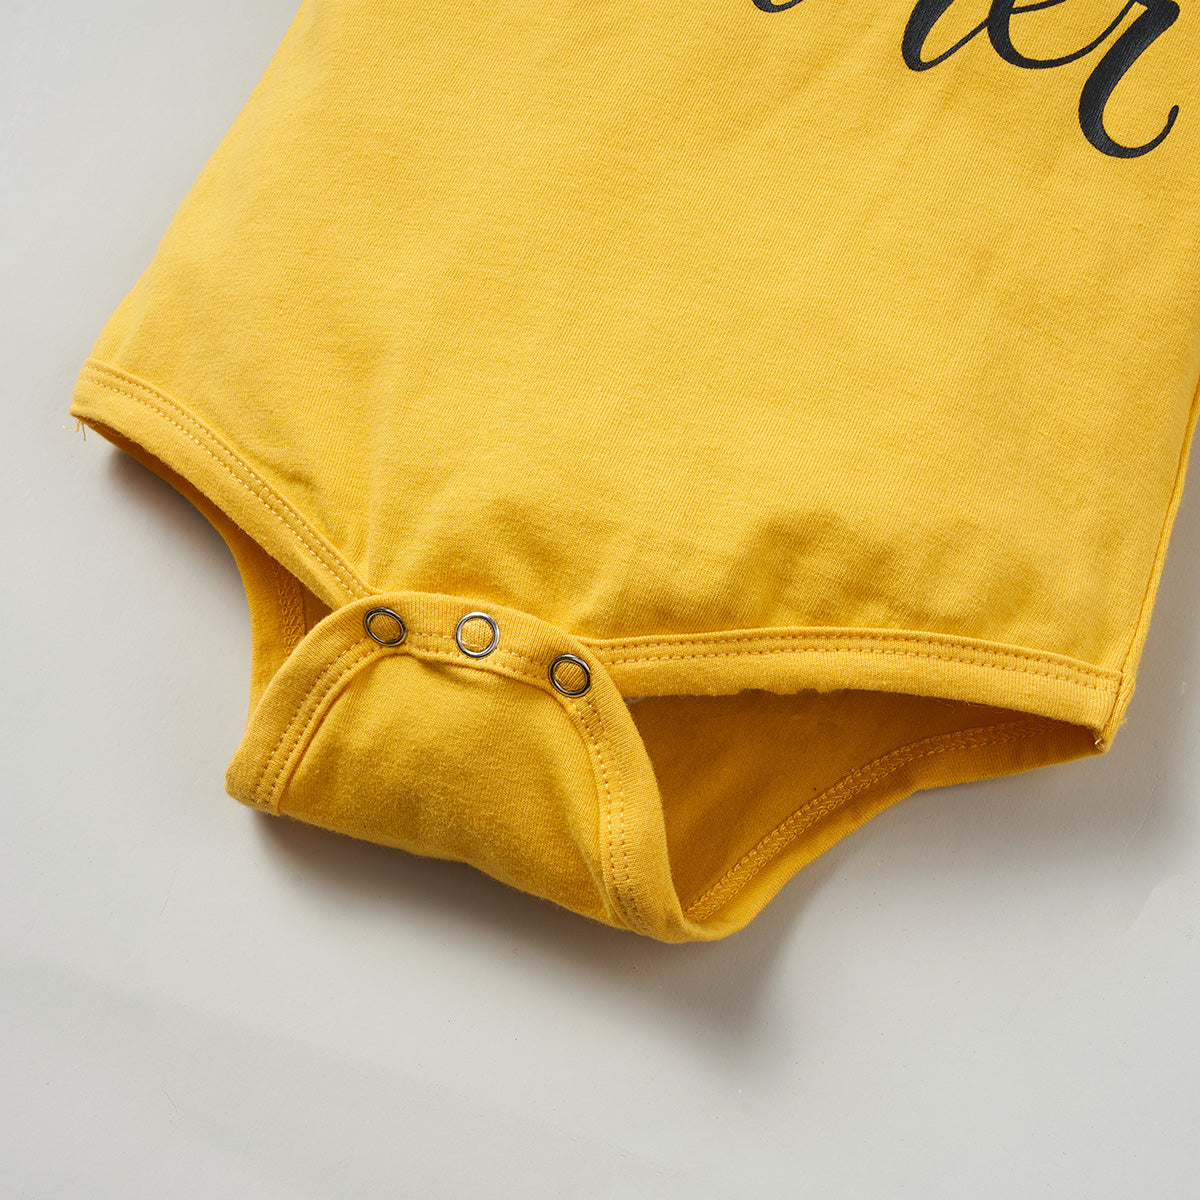 Children’s Girls HELLO SUMMER Bodysuit and Sunflower Print Pants Set